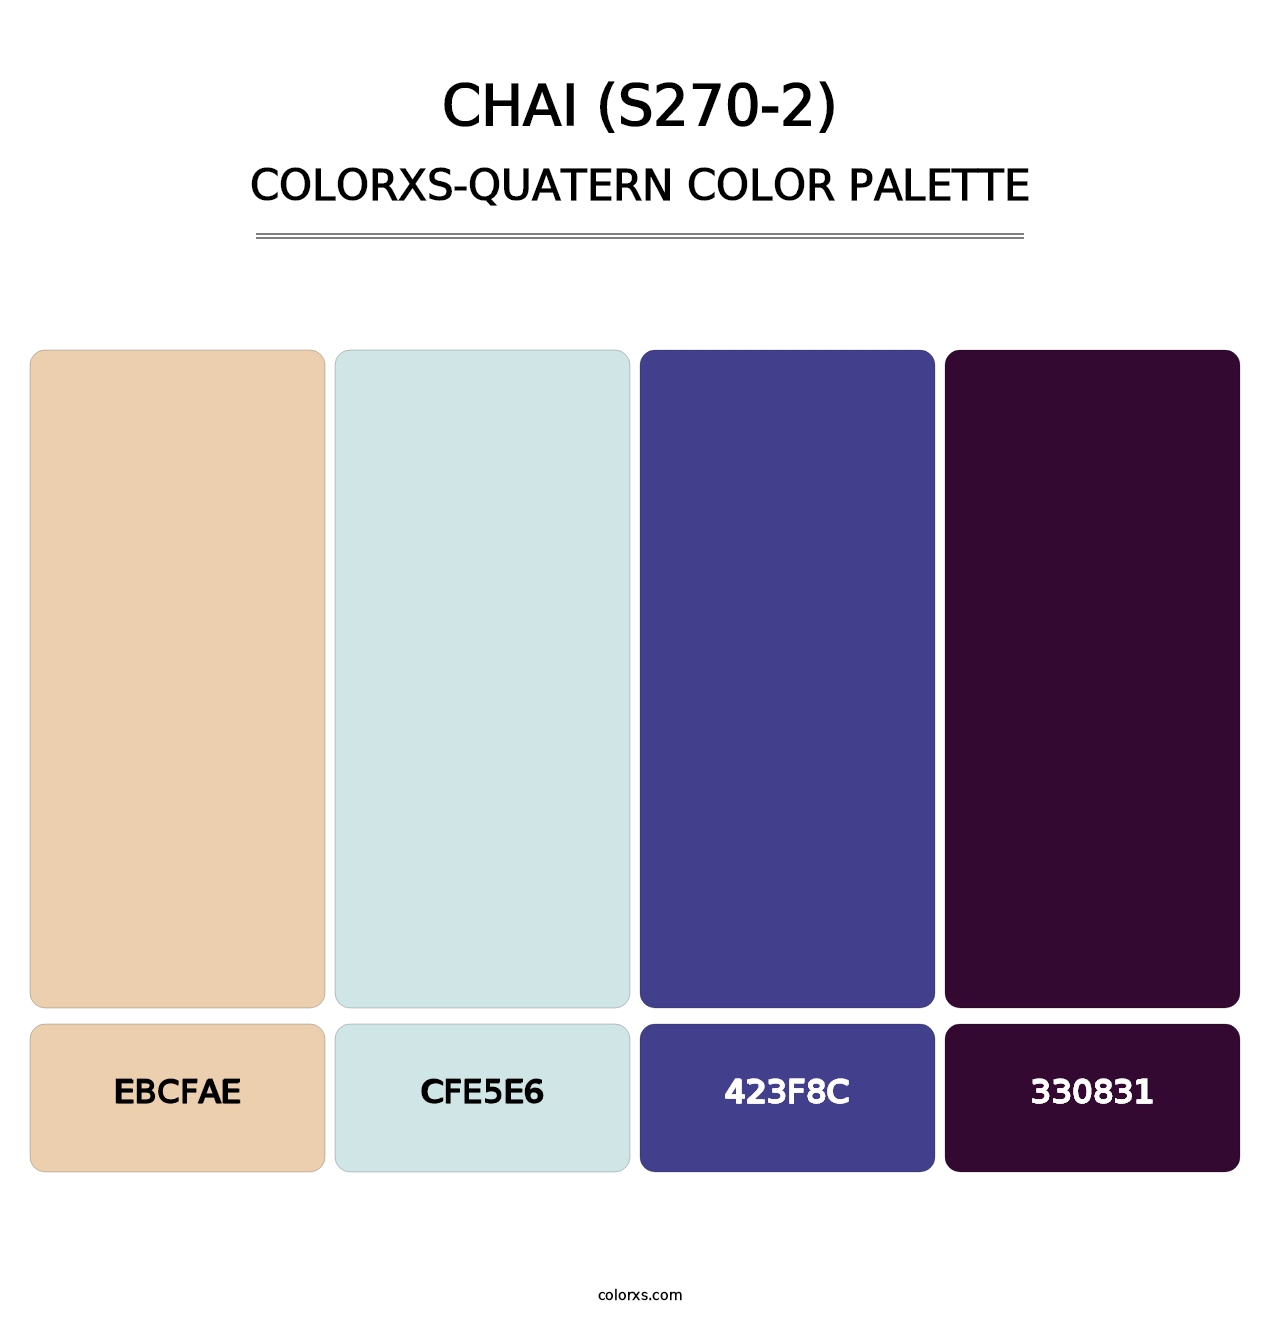 Chai (S270-2) - Colorxs Quatern Palette